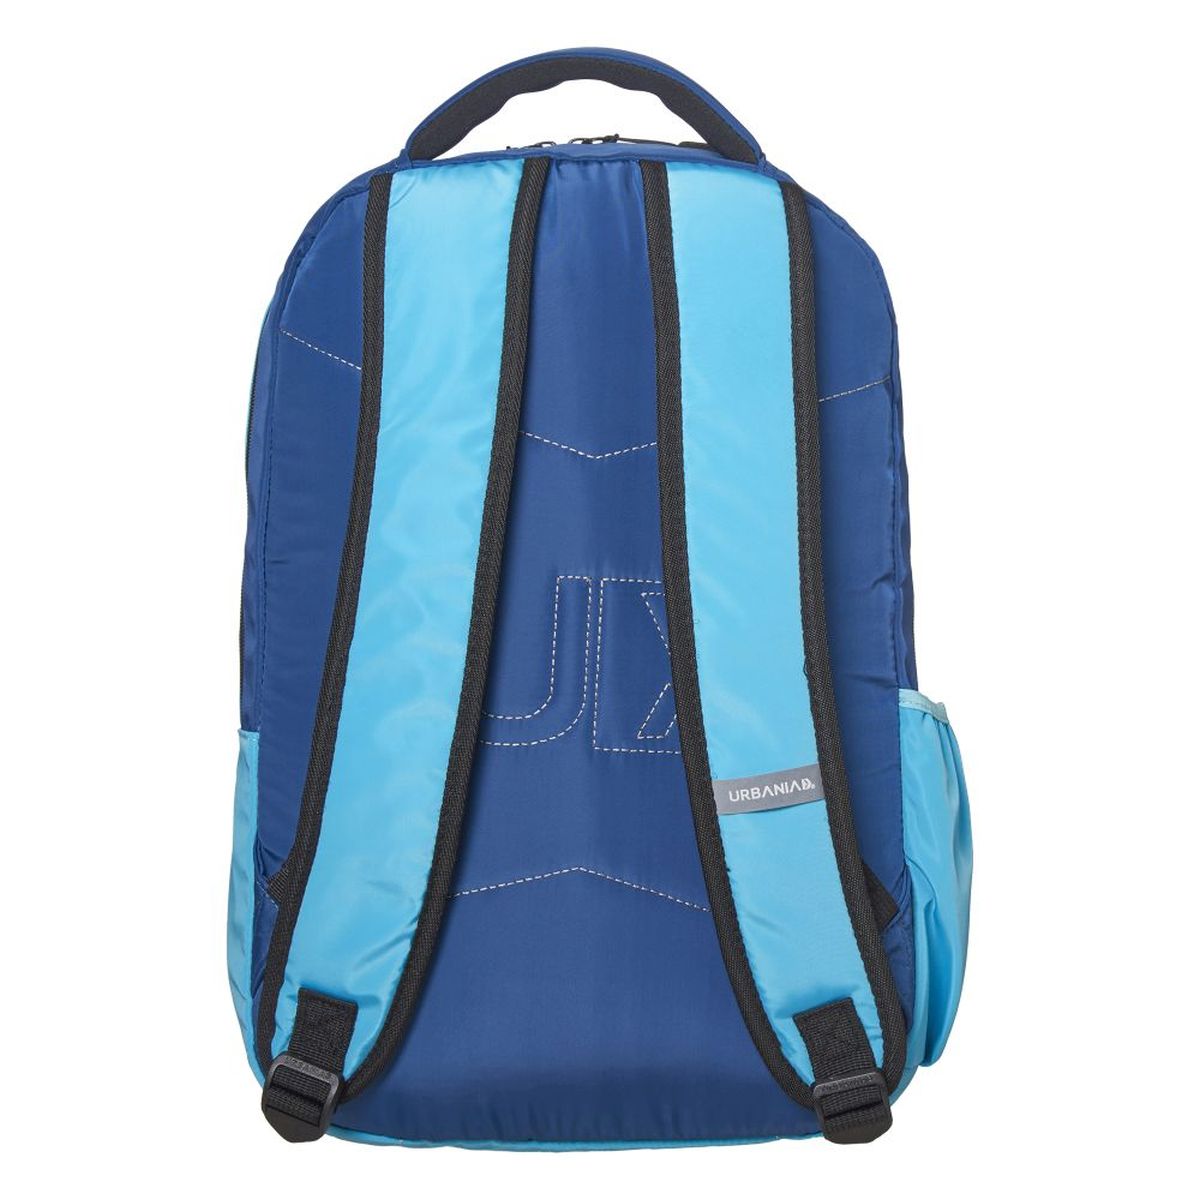 Backpack Lit Trends Ocean